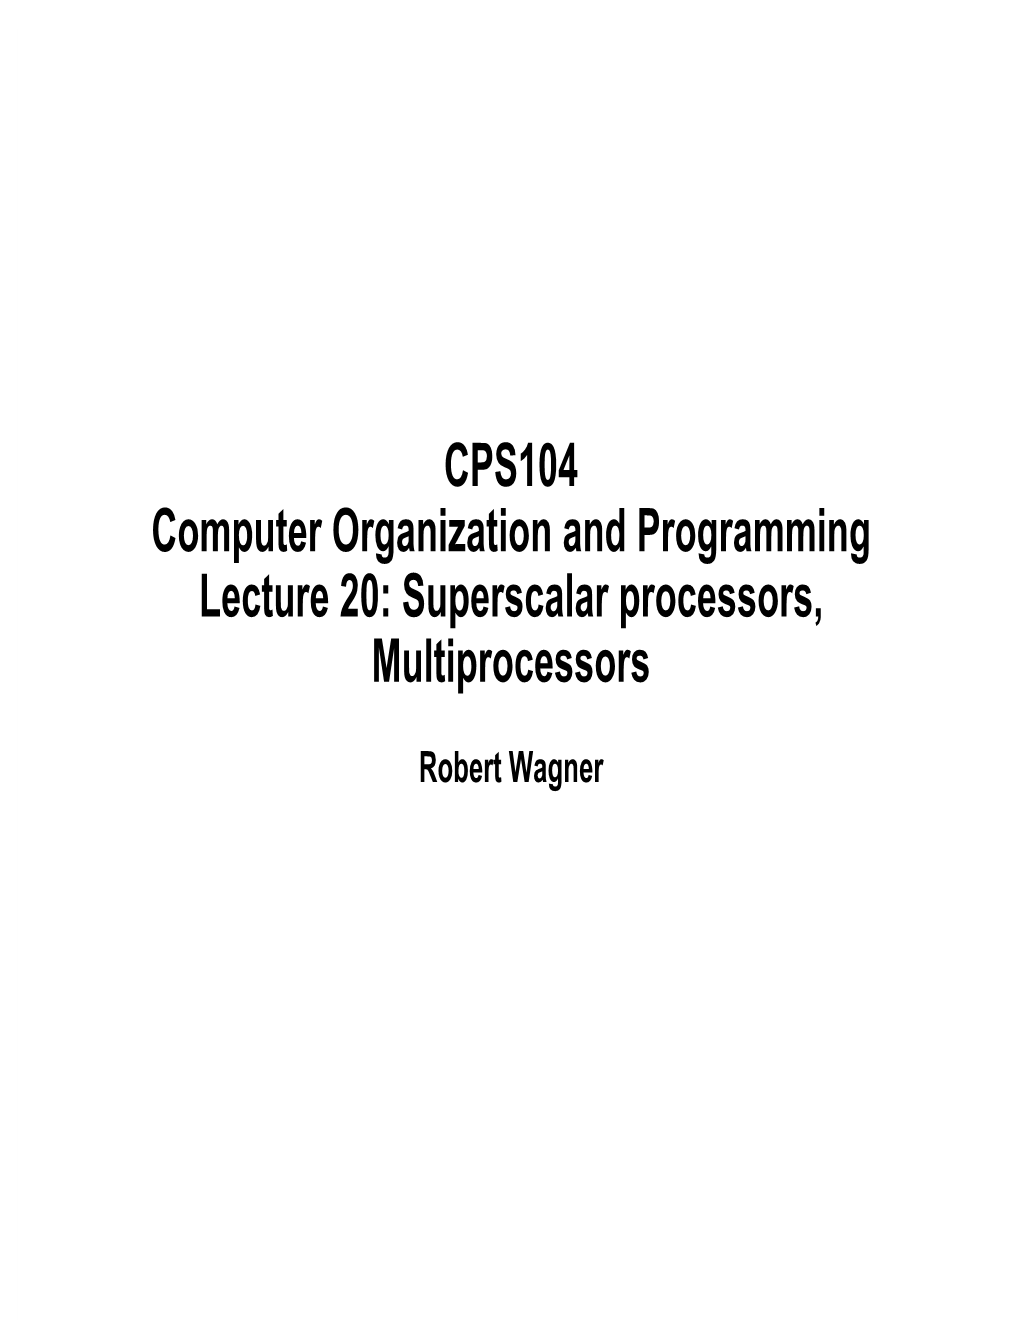 Superscalar Processors, Multiprocessors